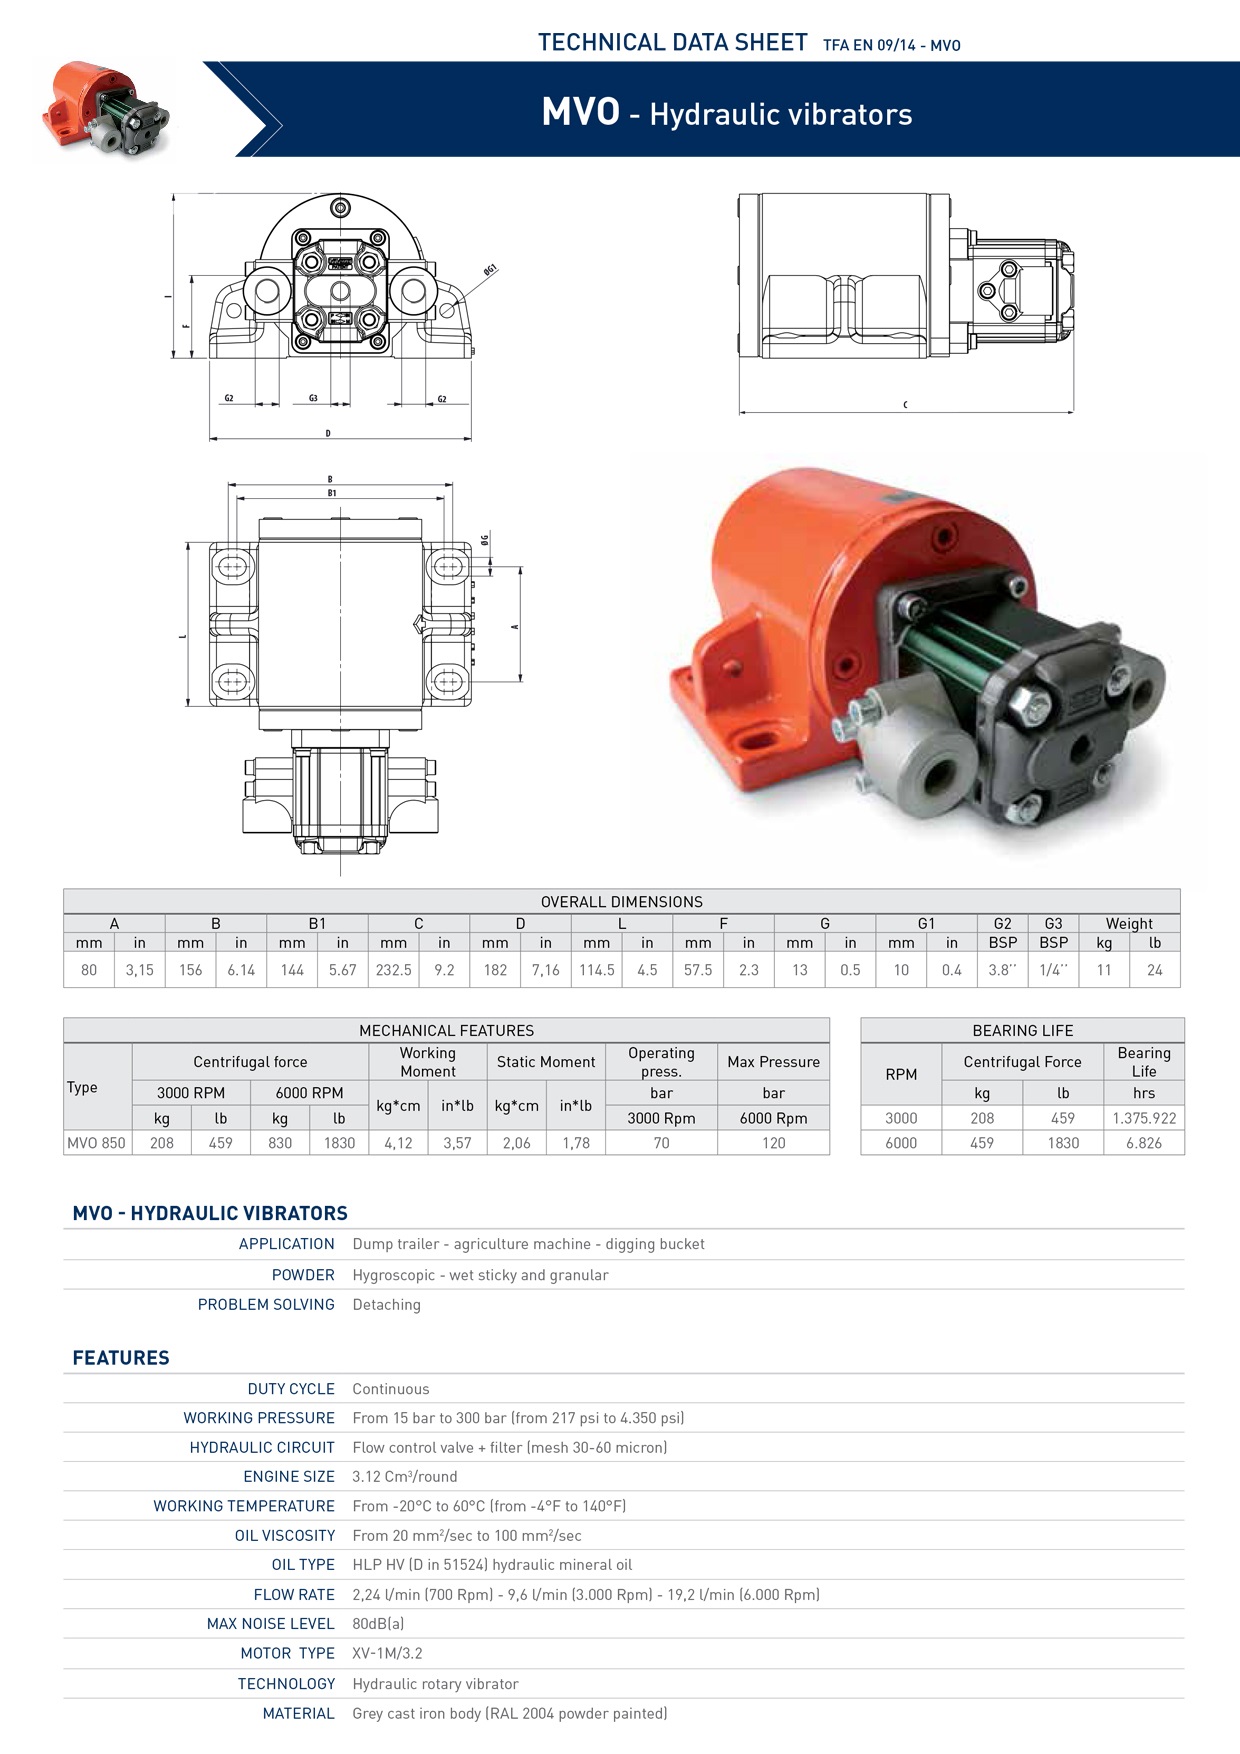 Cameron hydraulic data book pdf free download